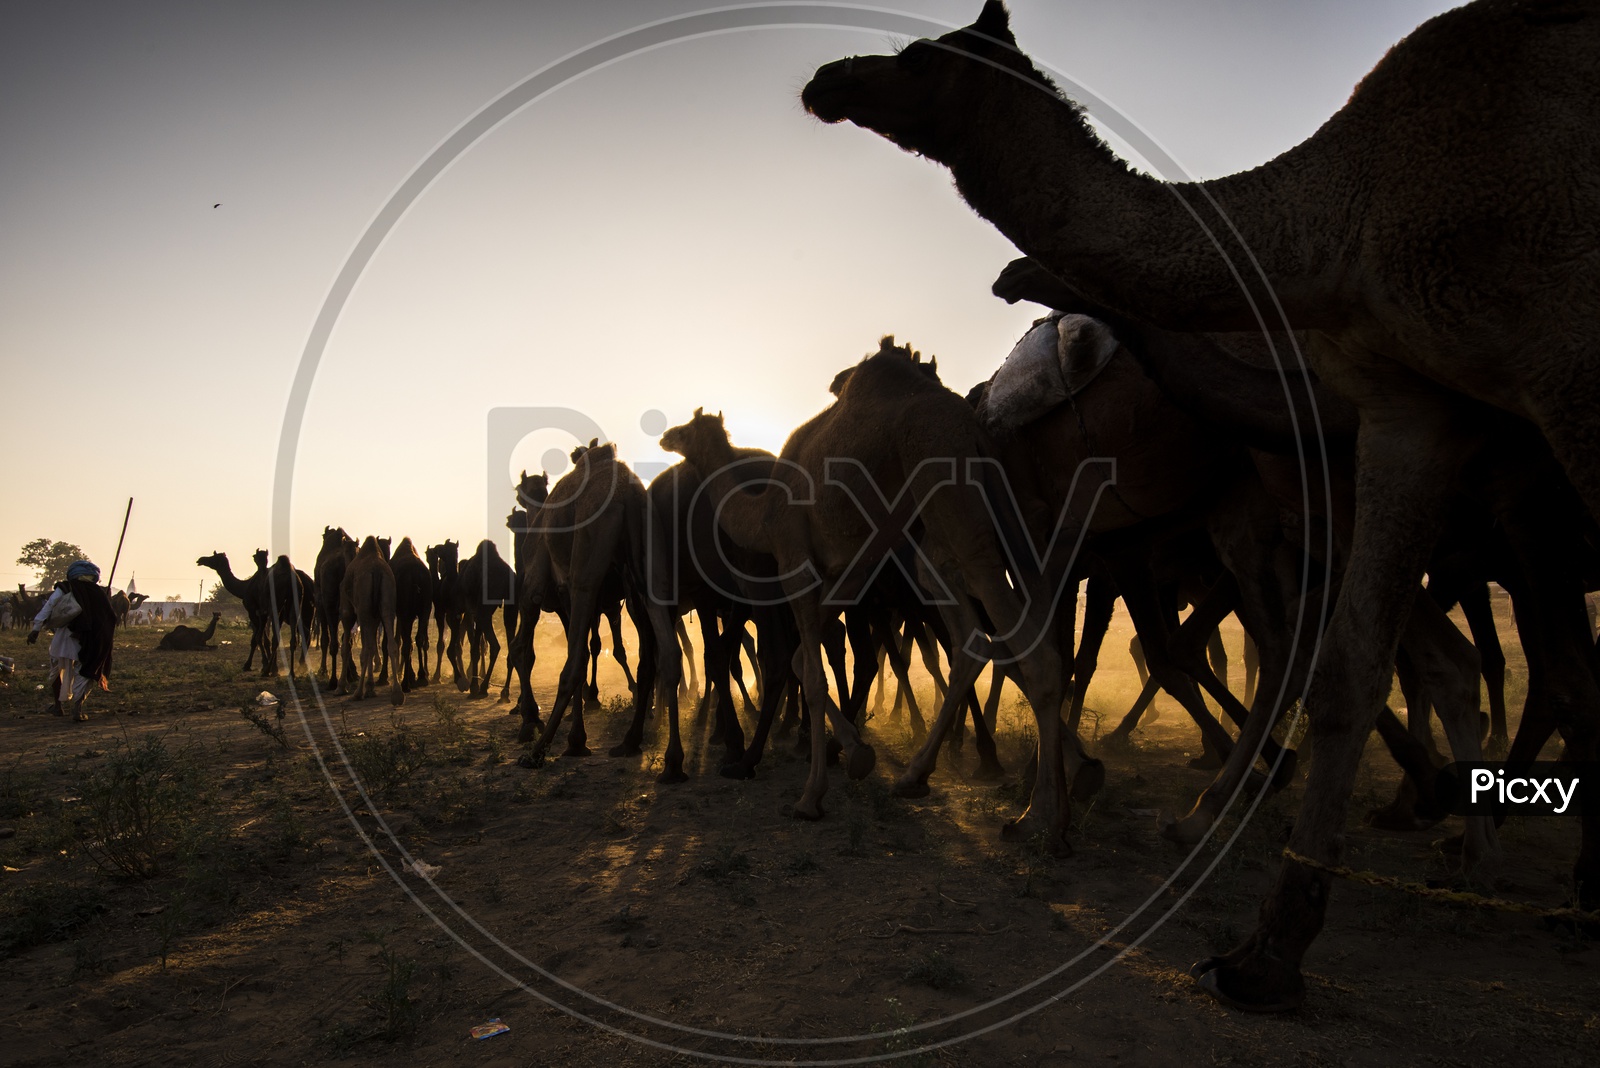 Silhouette of Camels In Pushkar Camel Fair